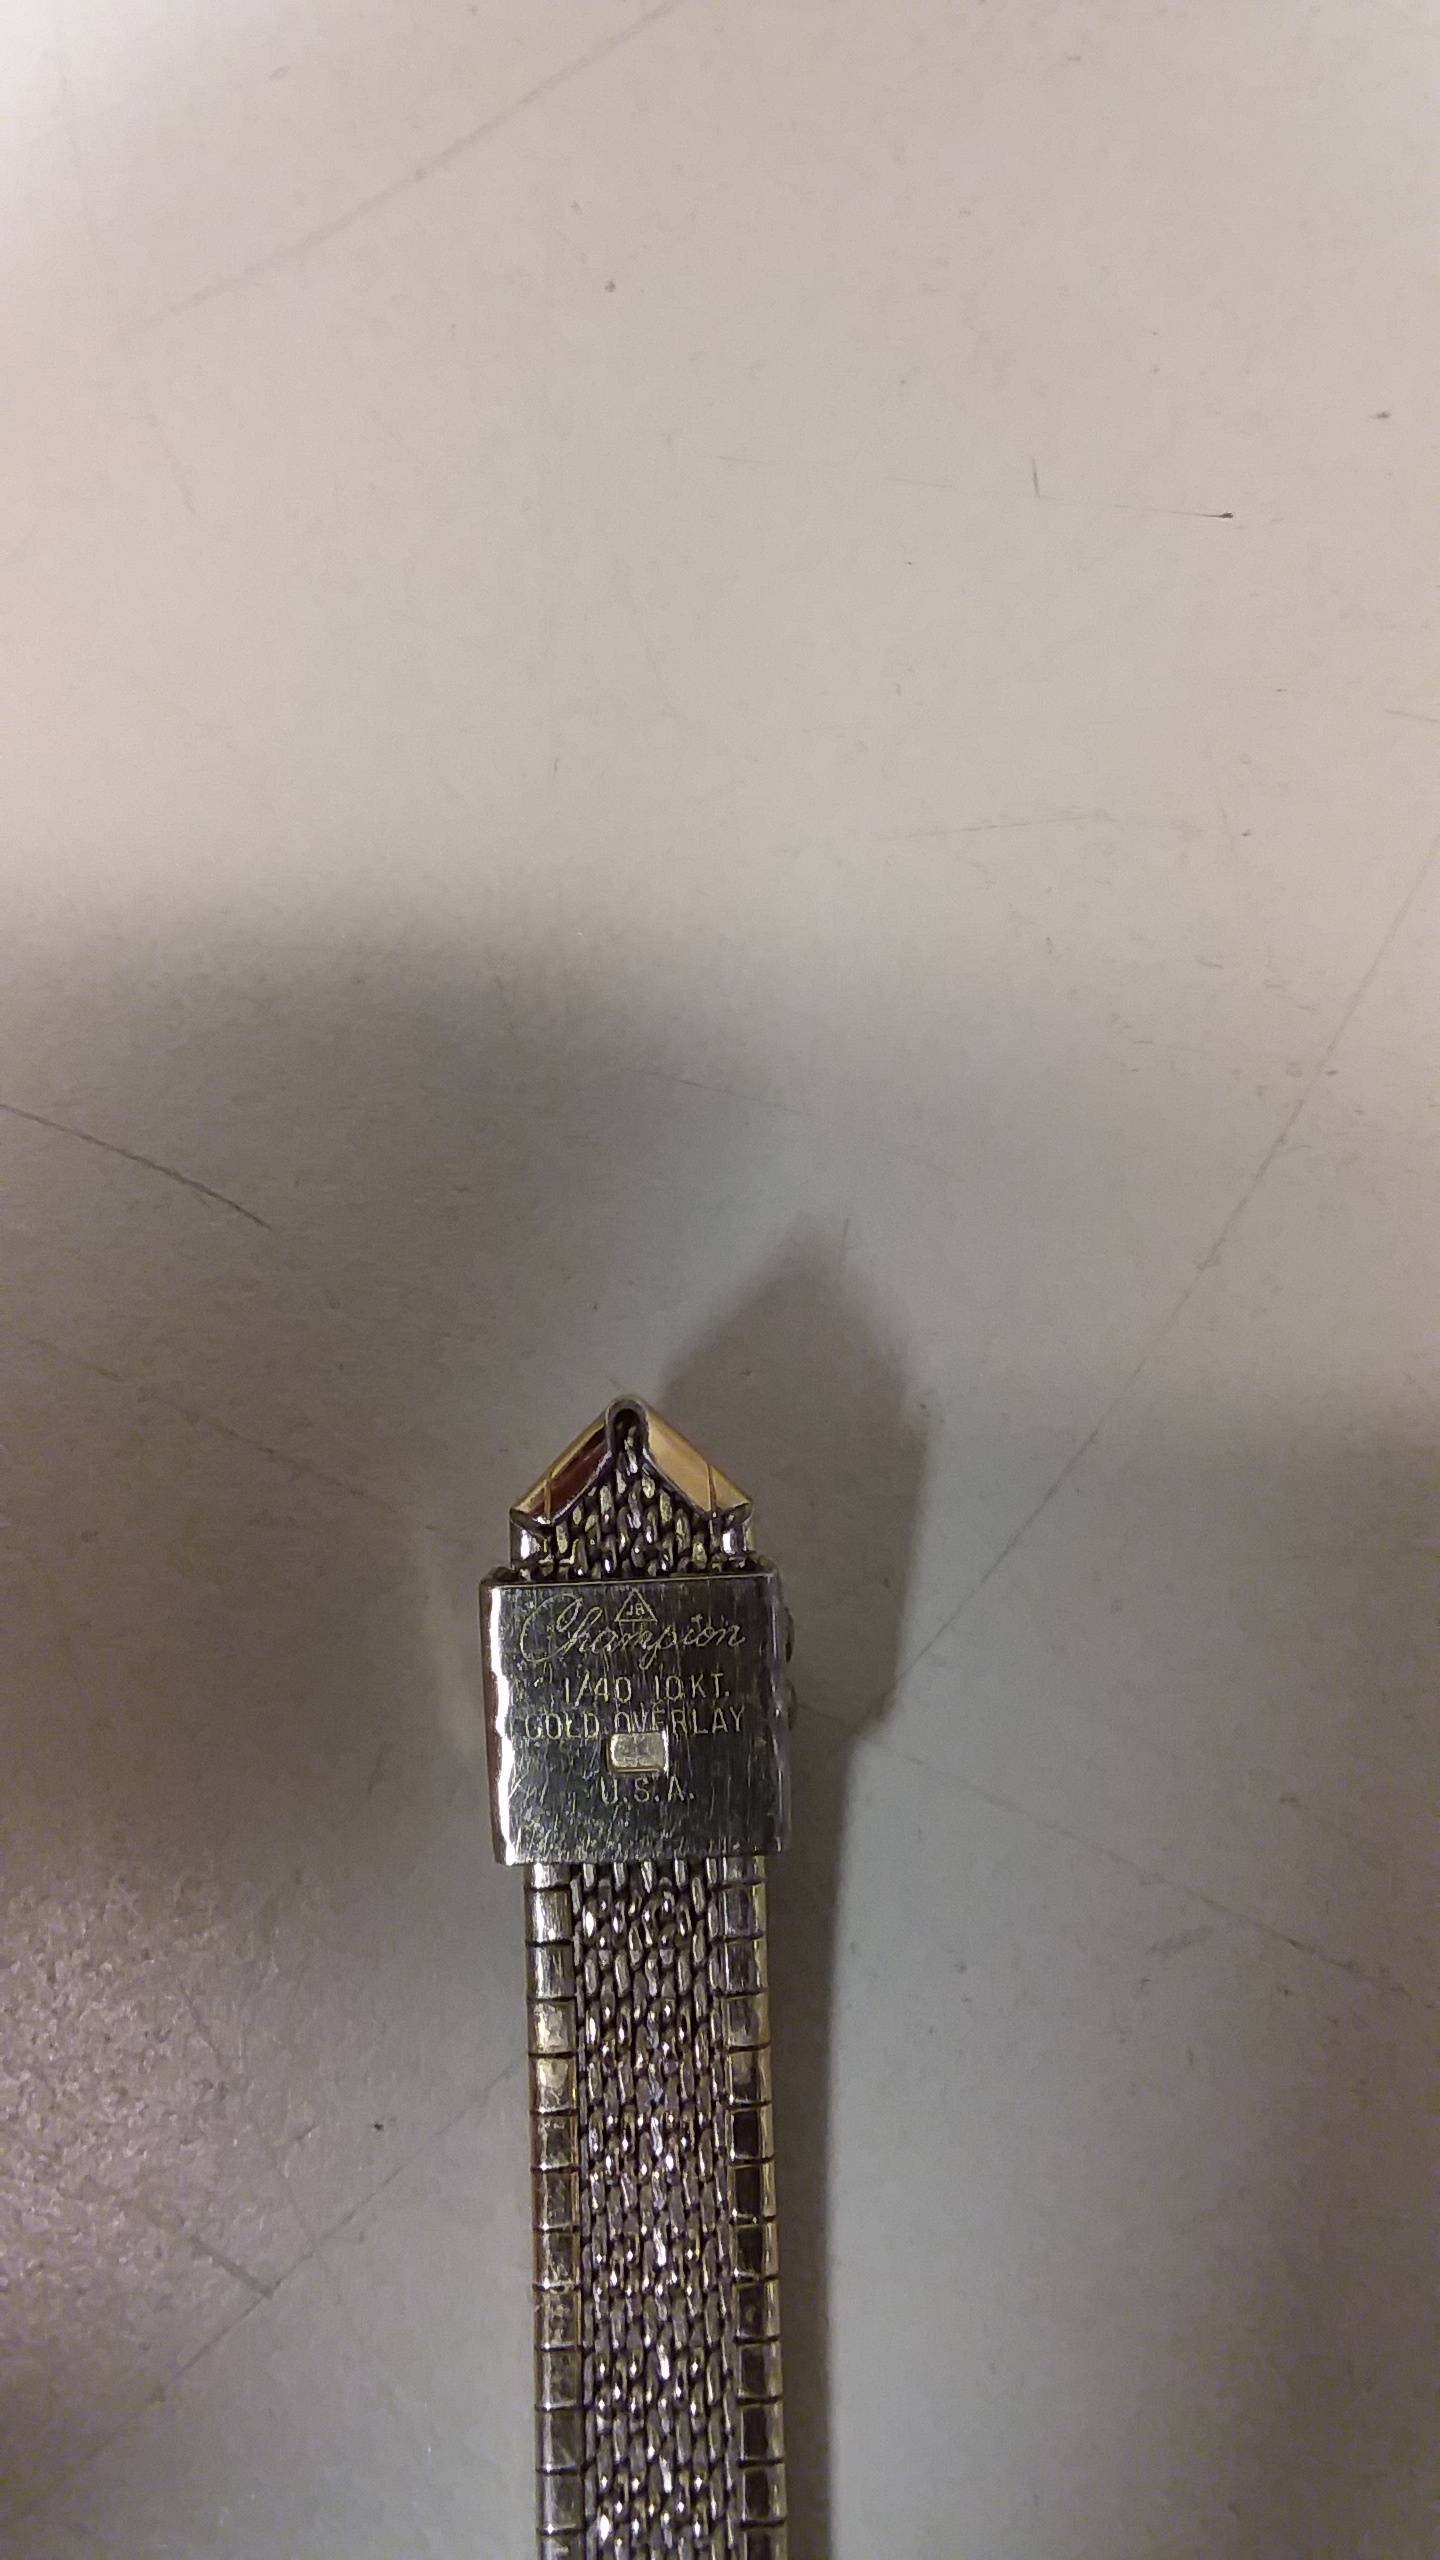 1975 lock marking Bulova watch